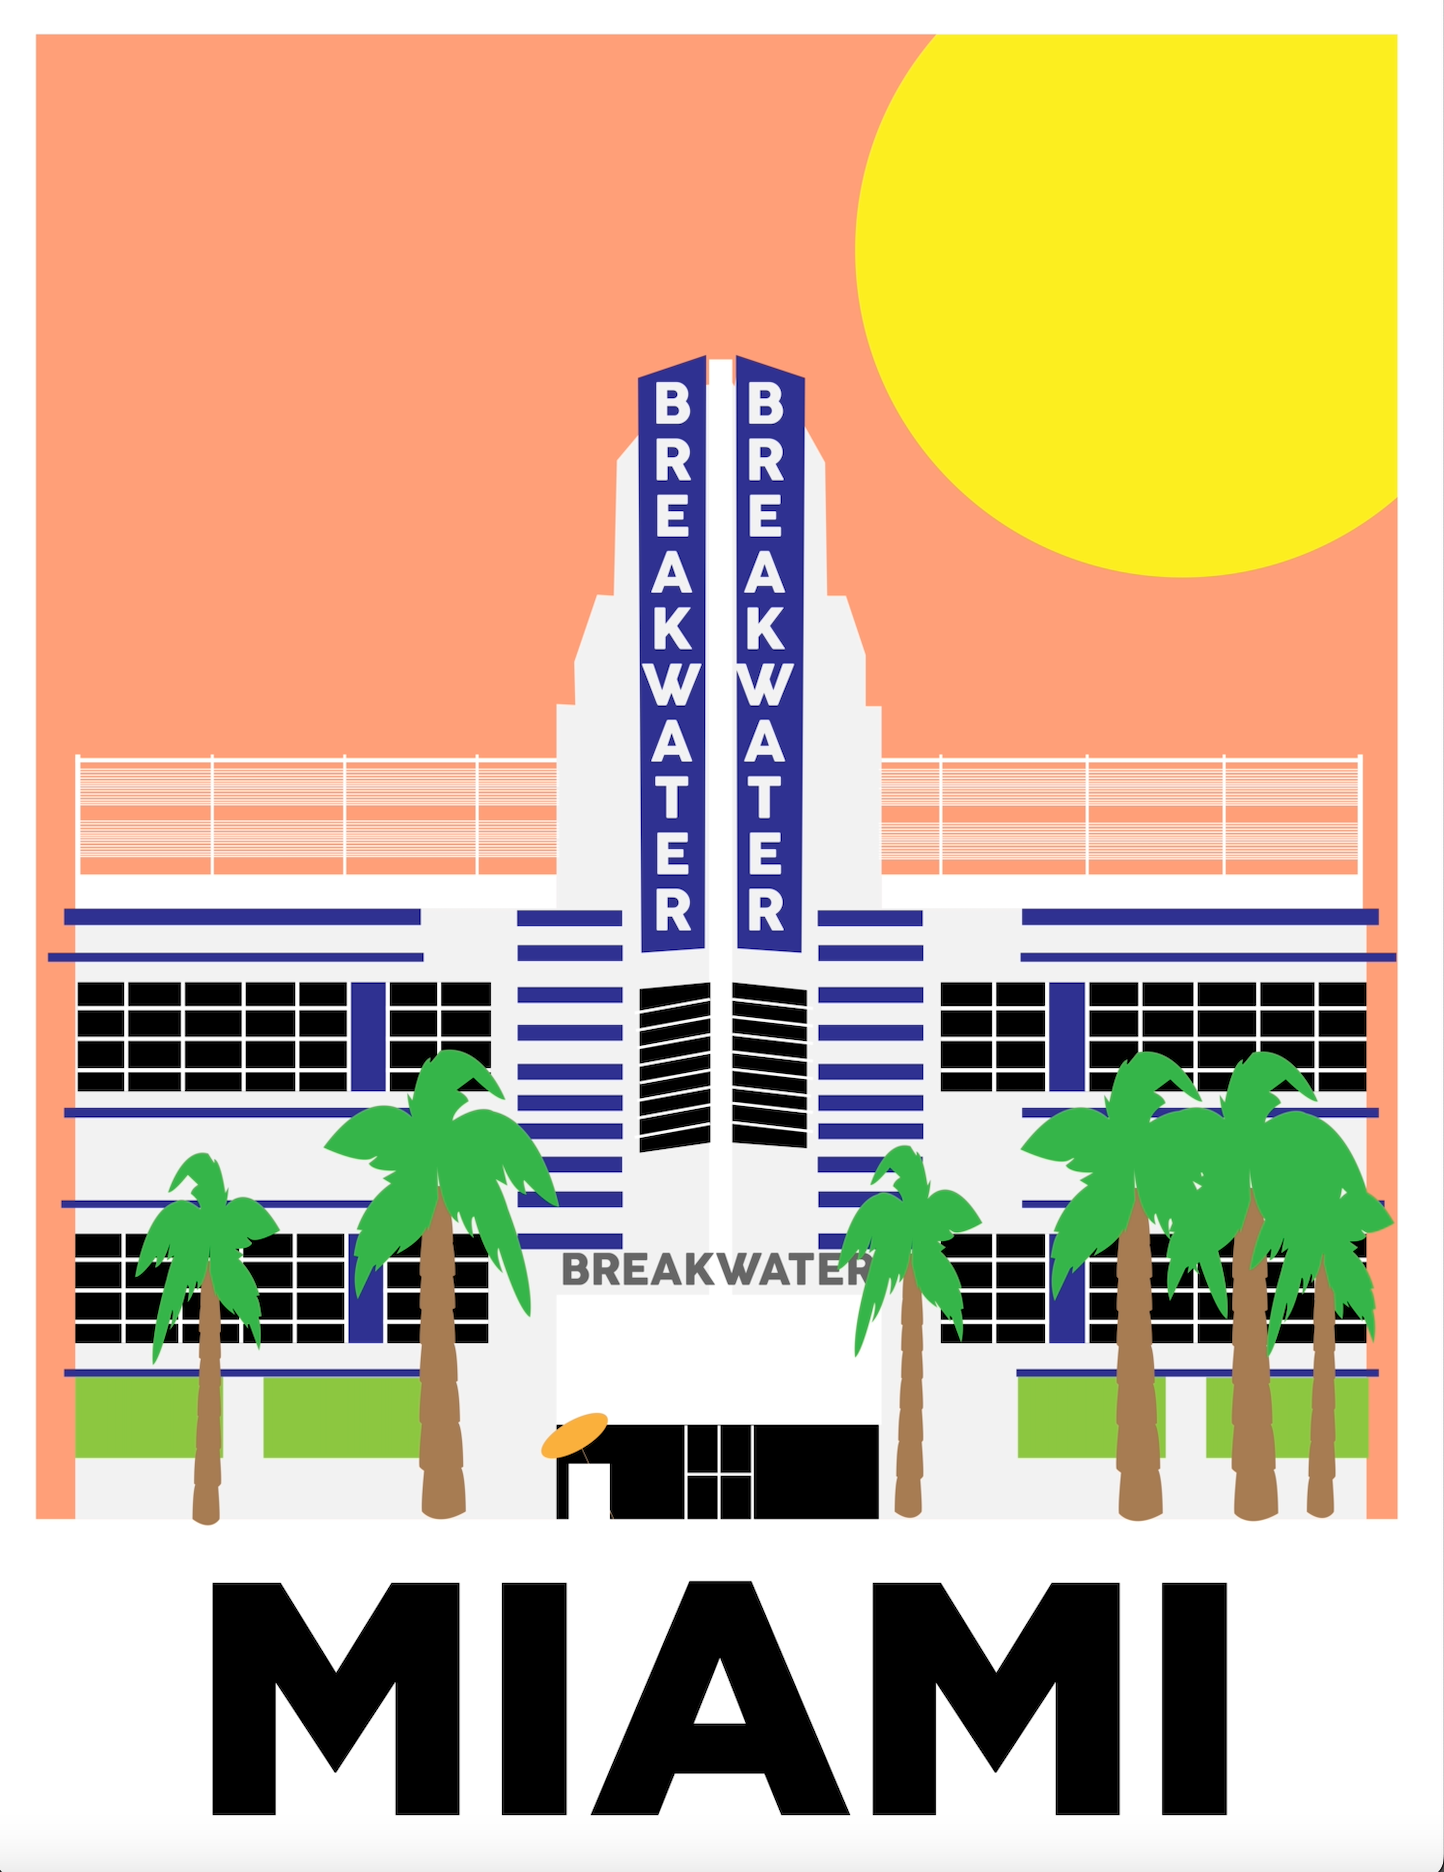 Miami Poster